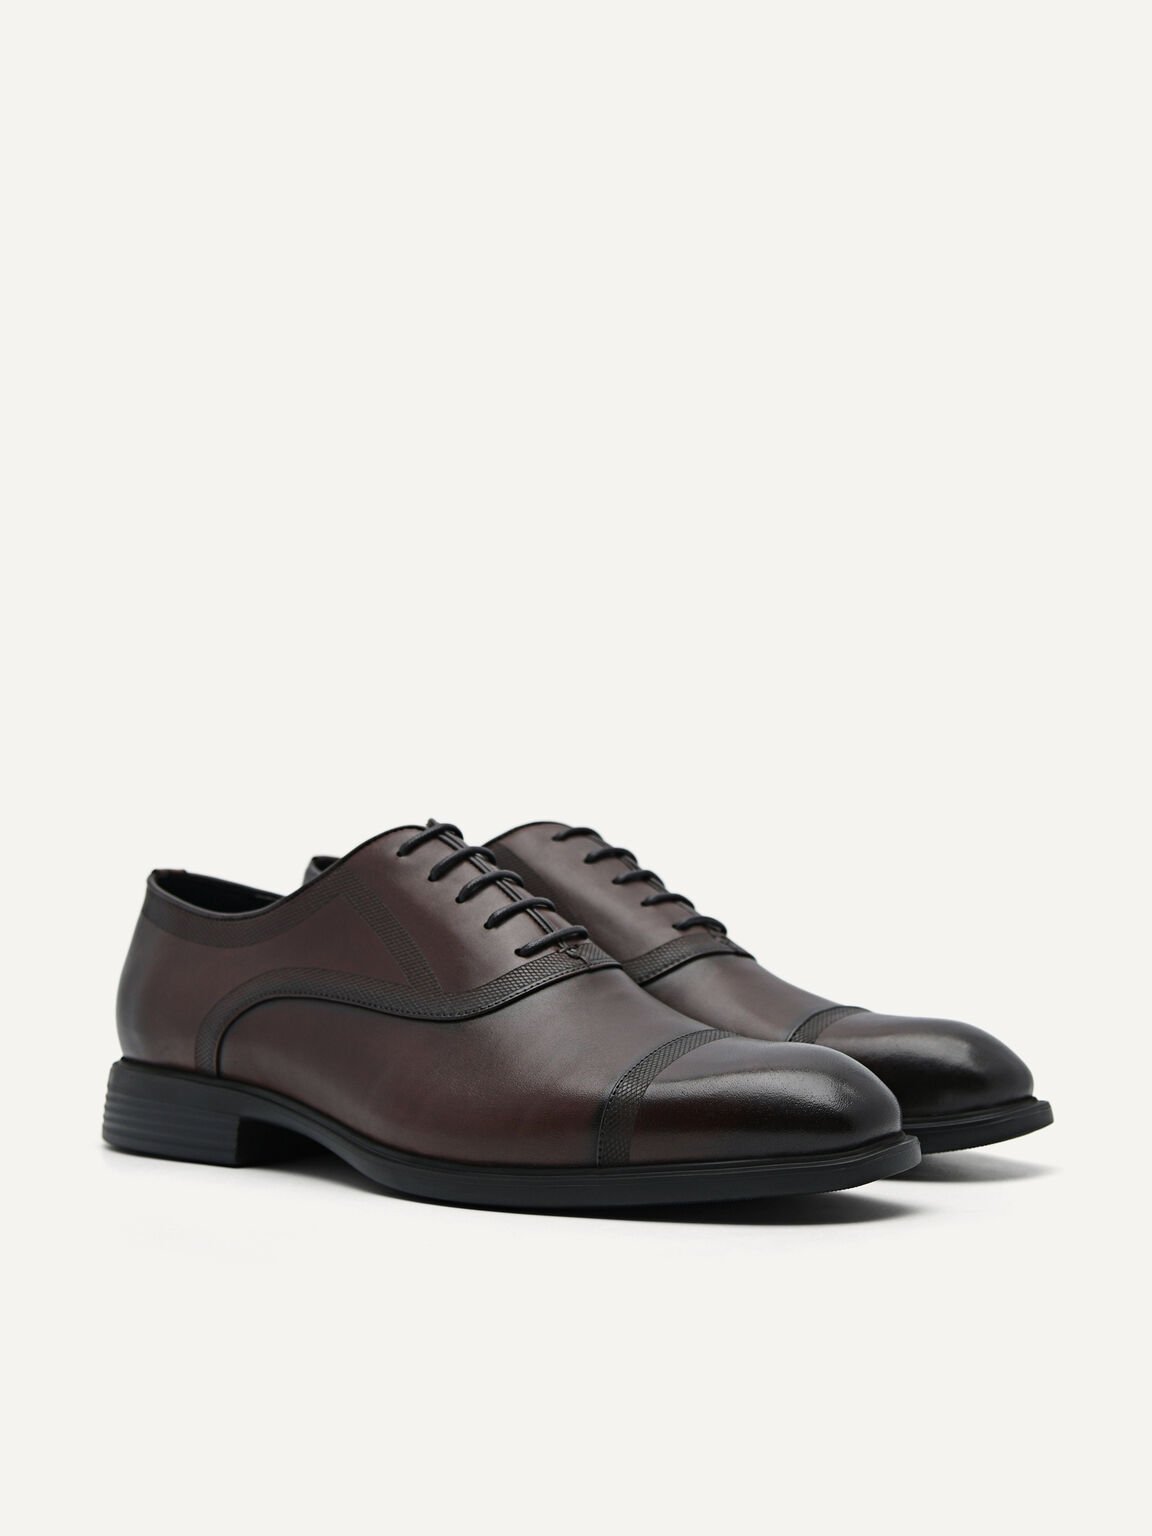 Altitude Thomas Lightweight Oxford Shoes, Dark Brown